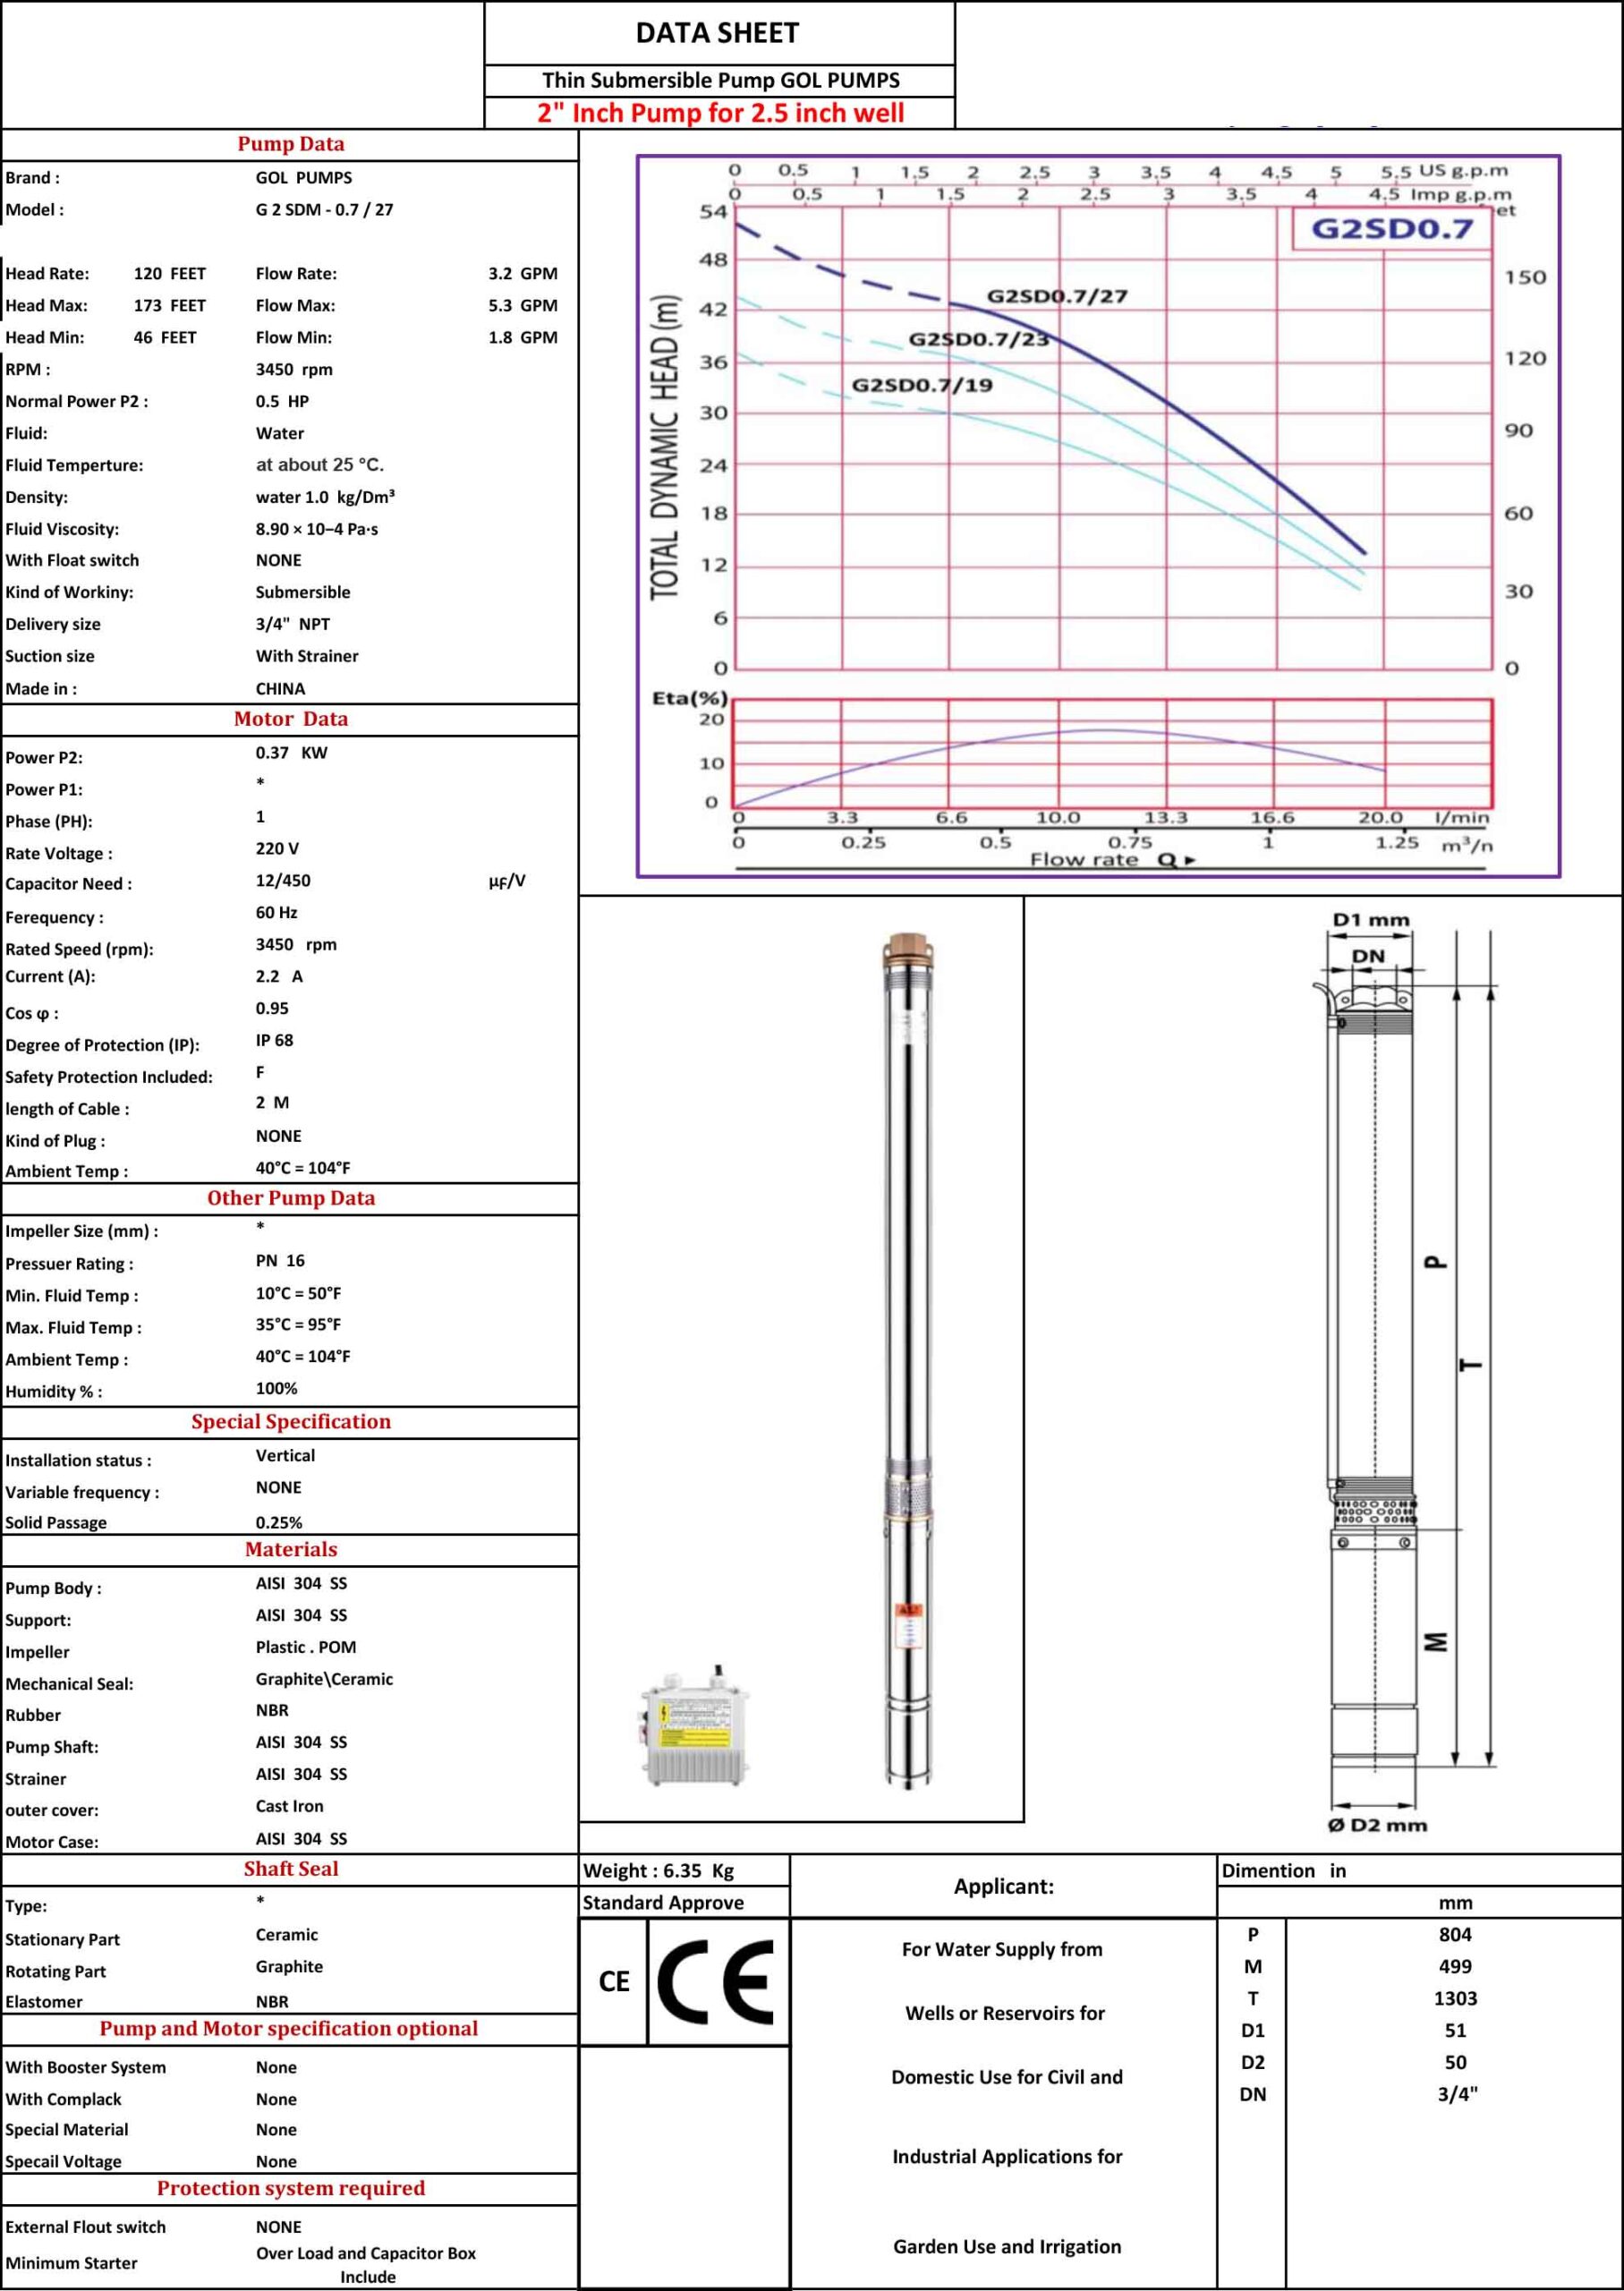 Thin Submersible Pump - Data Sheet